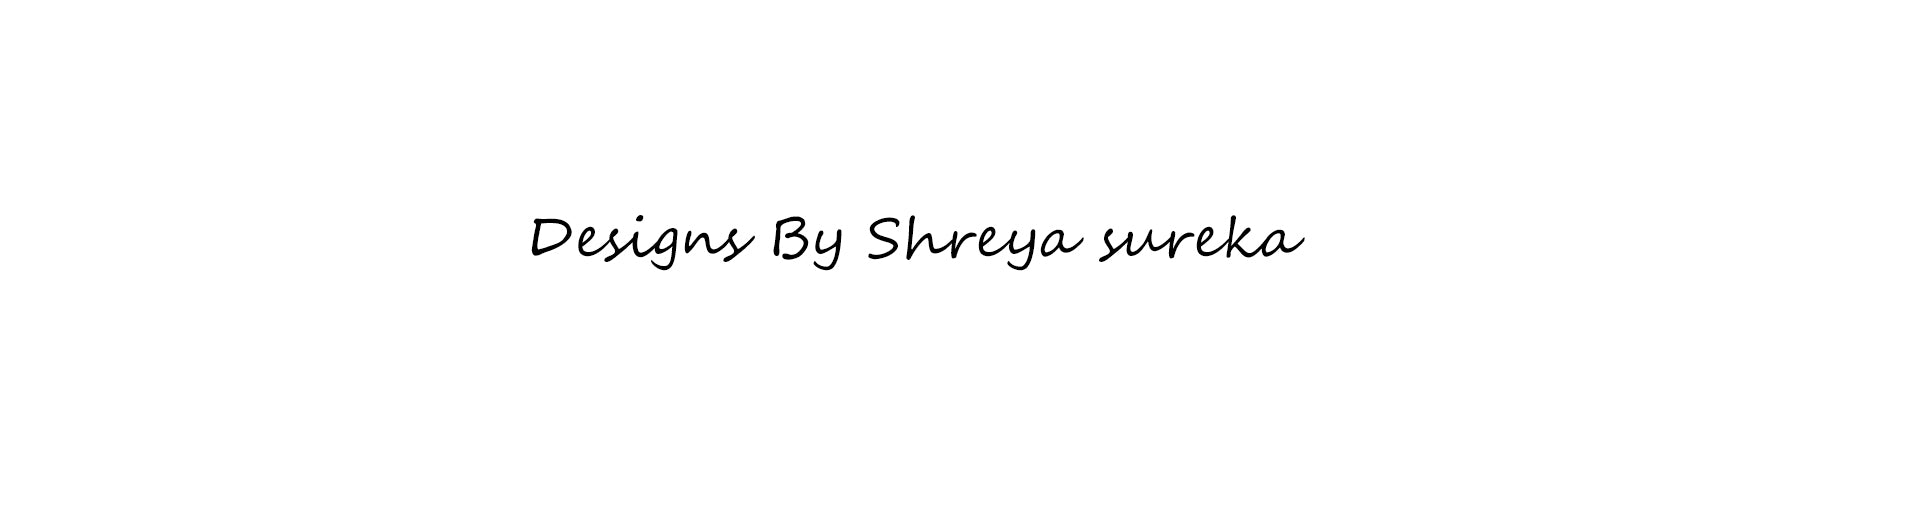 Shreya sureka